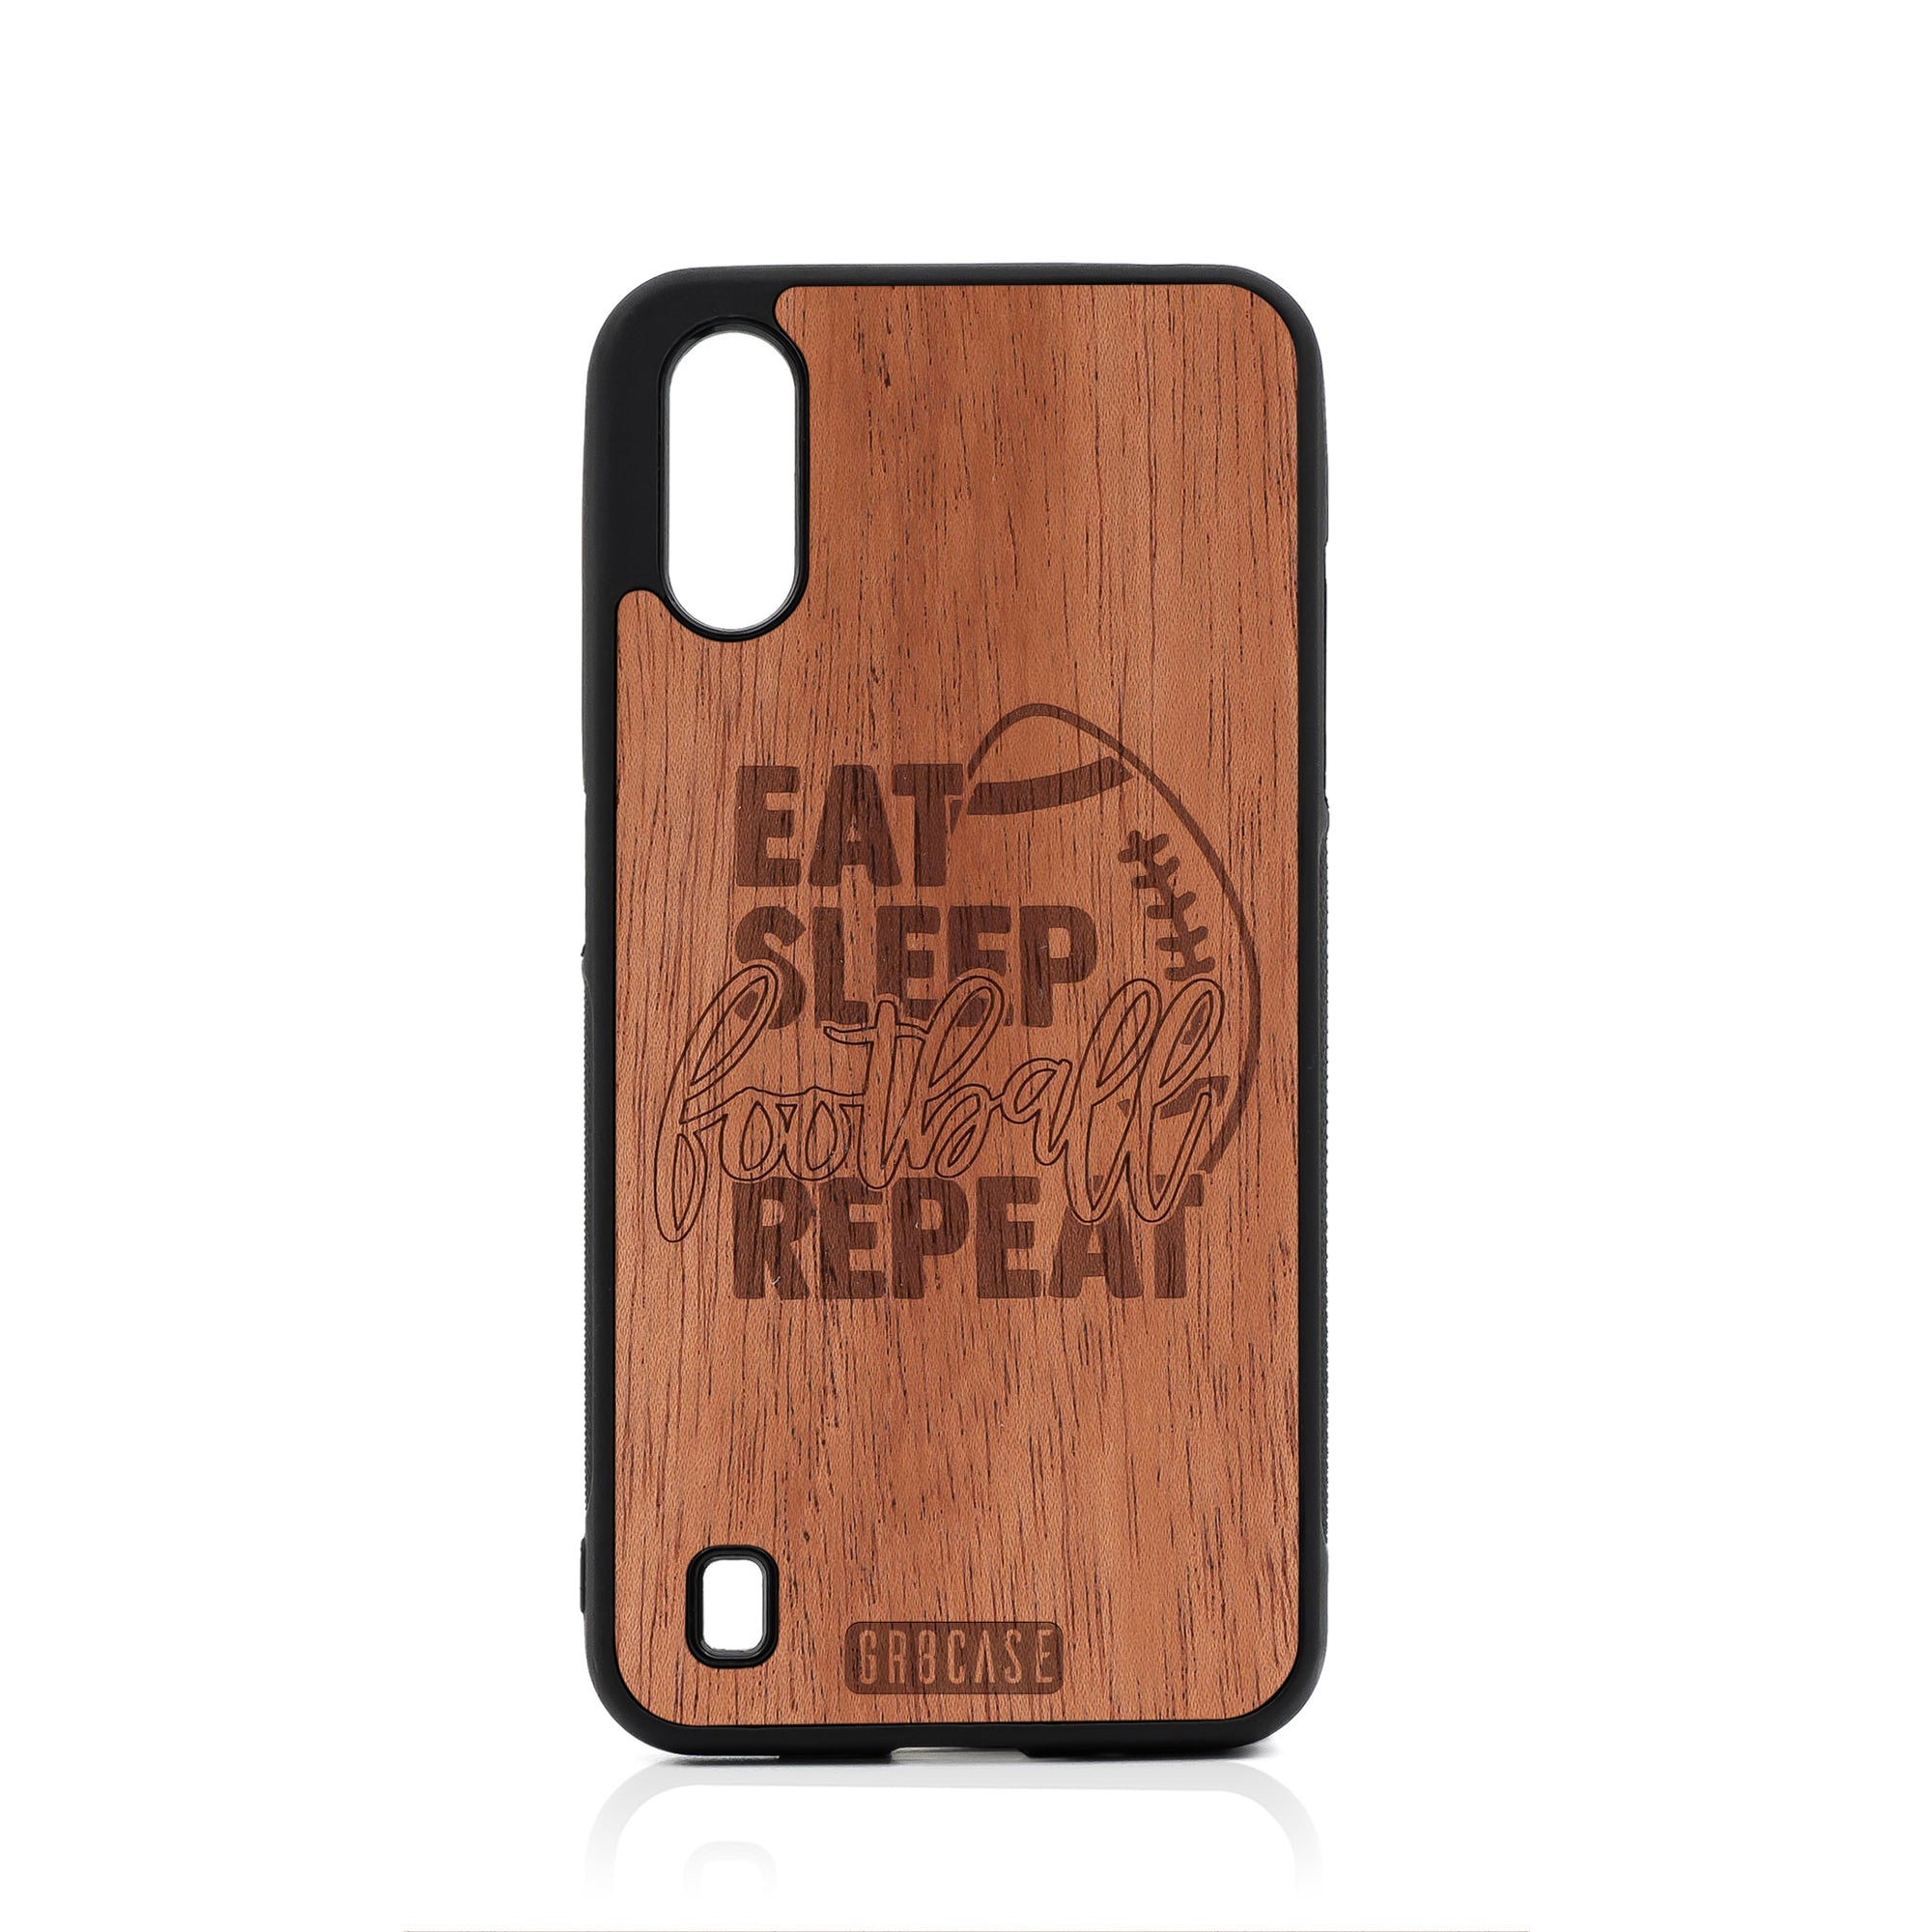 Eat Sleep Softball Repeat Design Wood Case For Samsung Galaxy A01